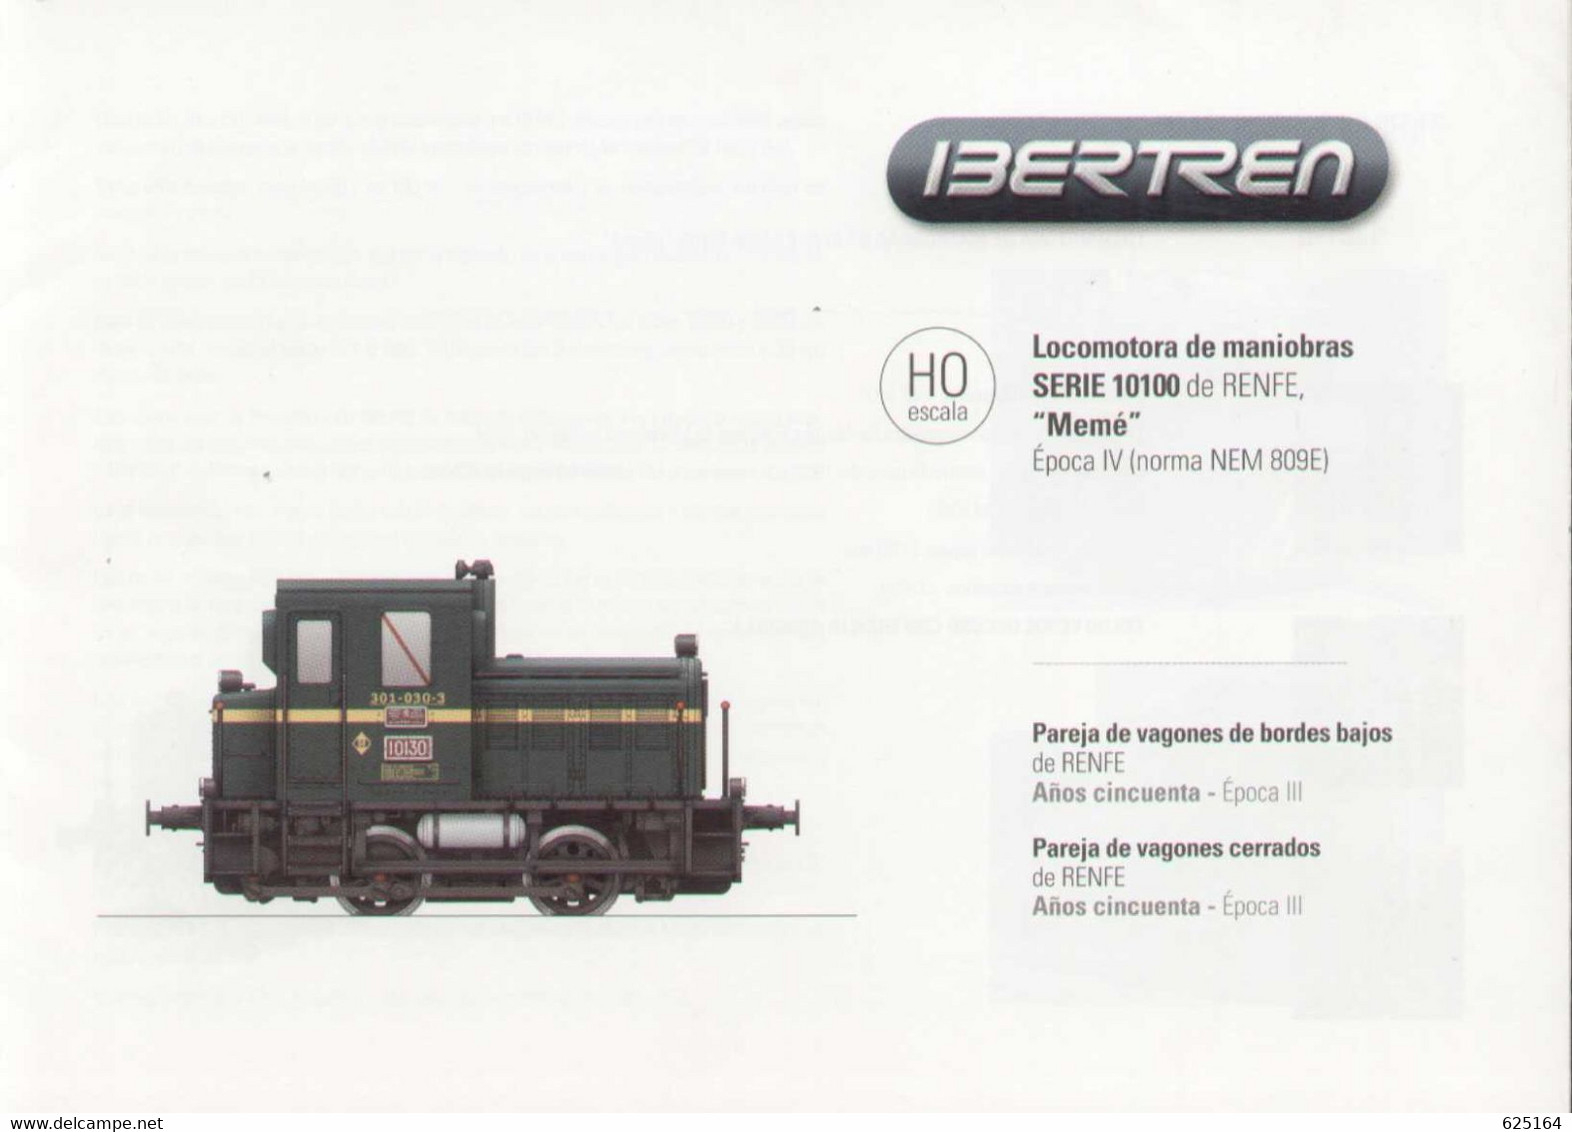 Catalogue IBERTREN 2007 Hoja De Información RENFE 10100 "Memé" HO -en Suédois - Non Classificati